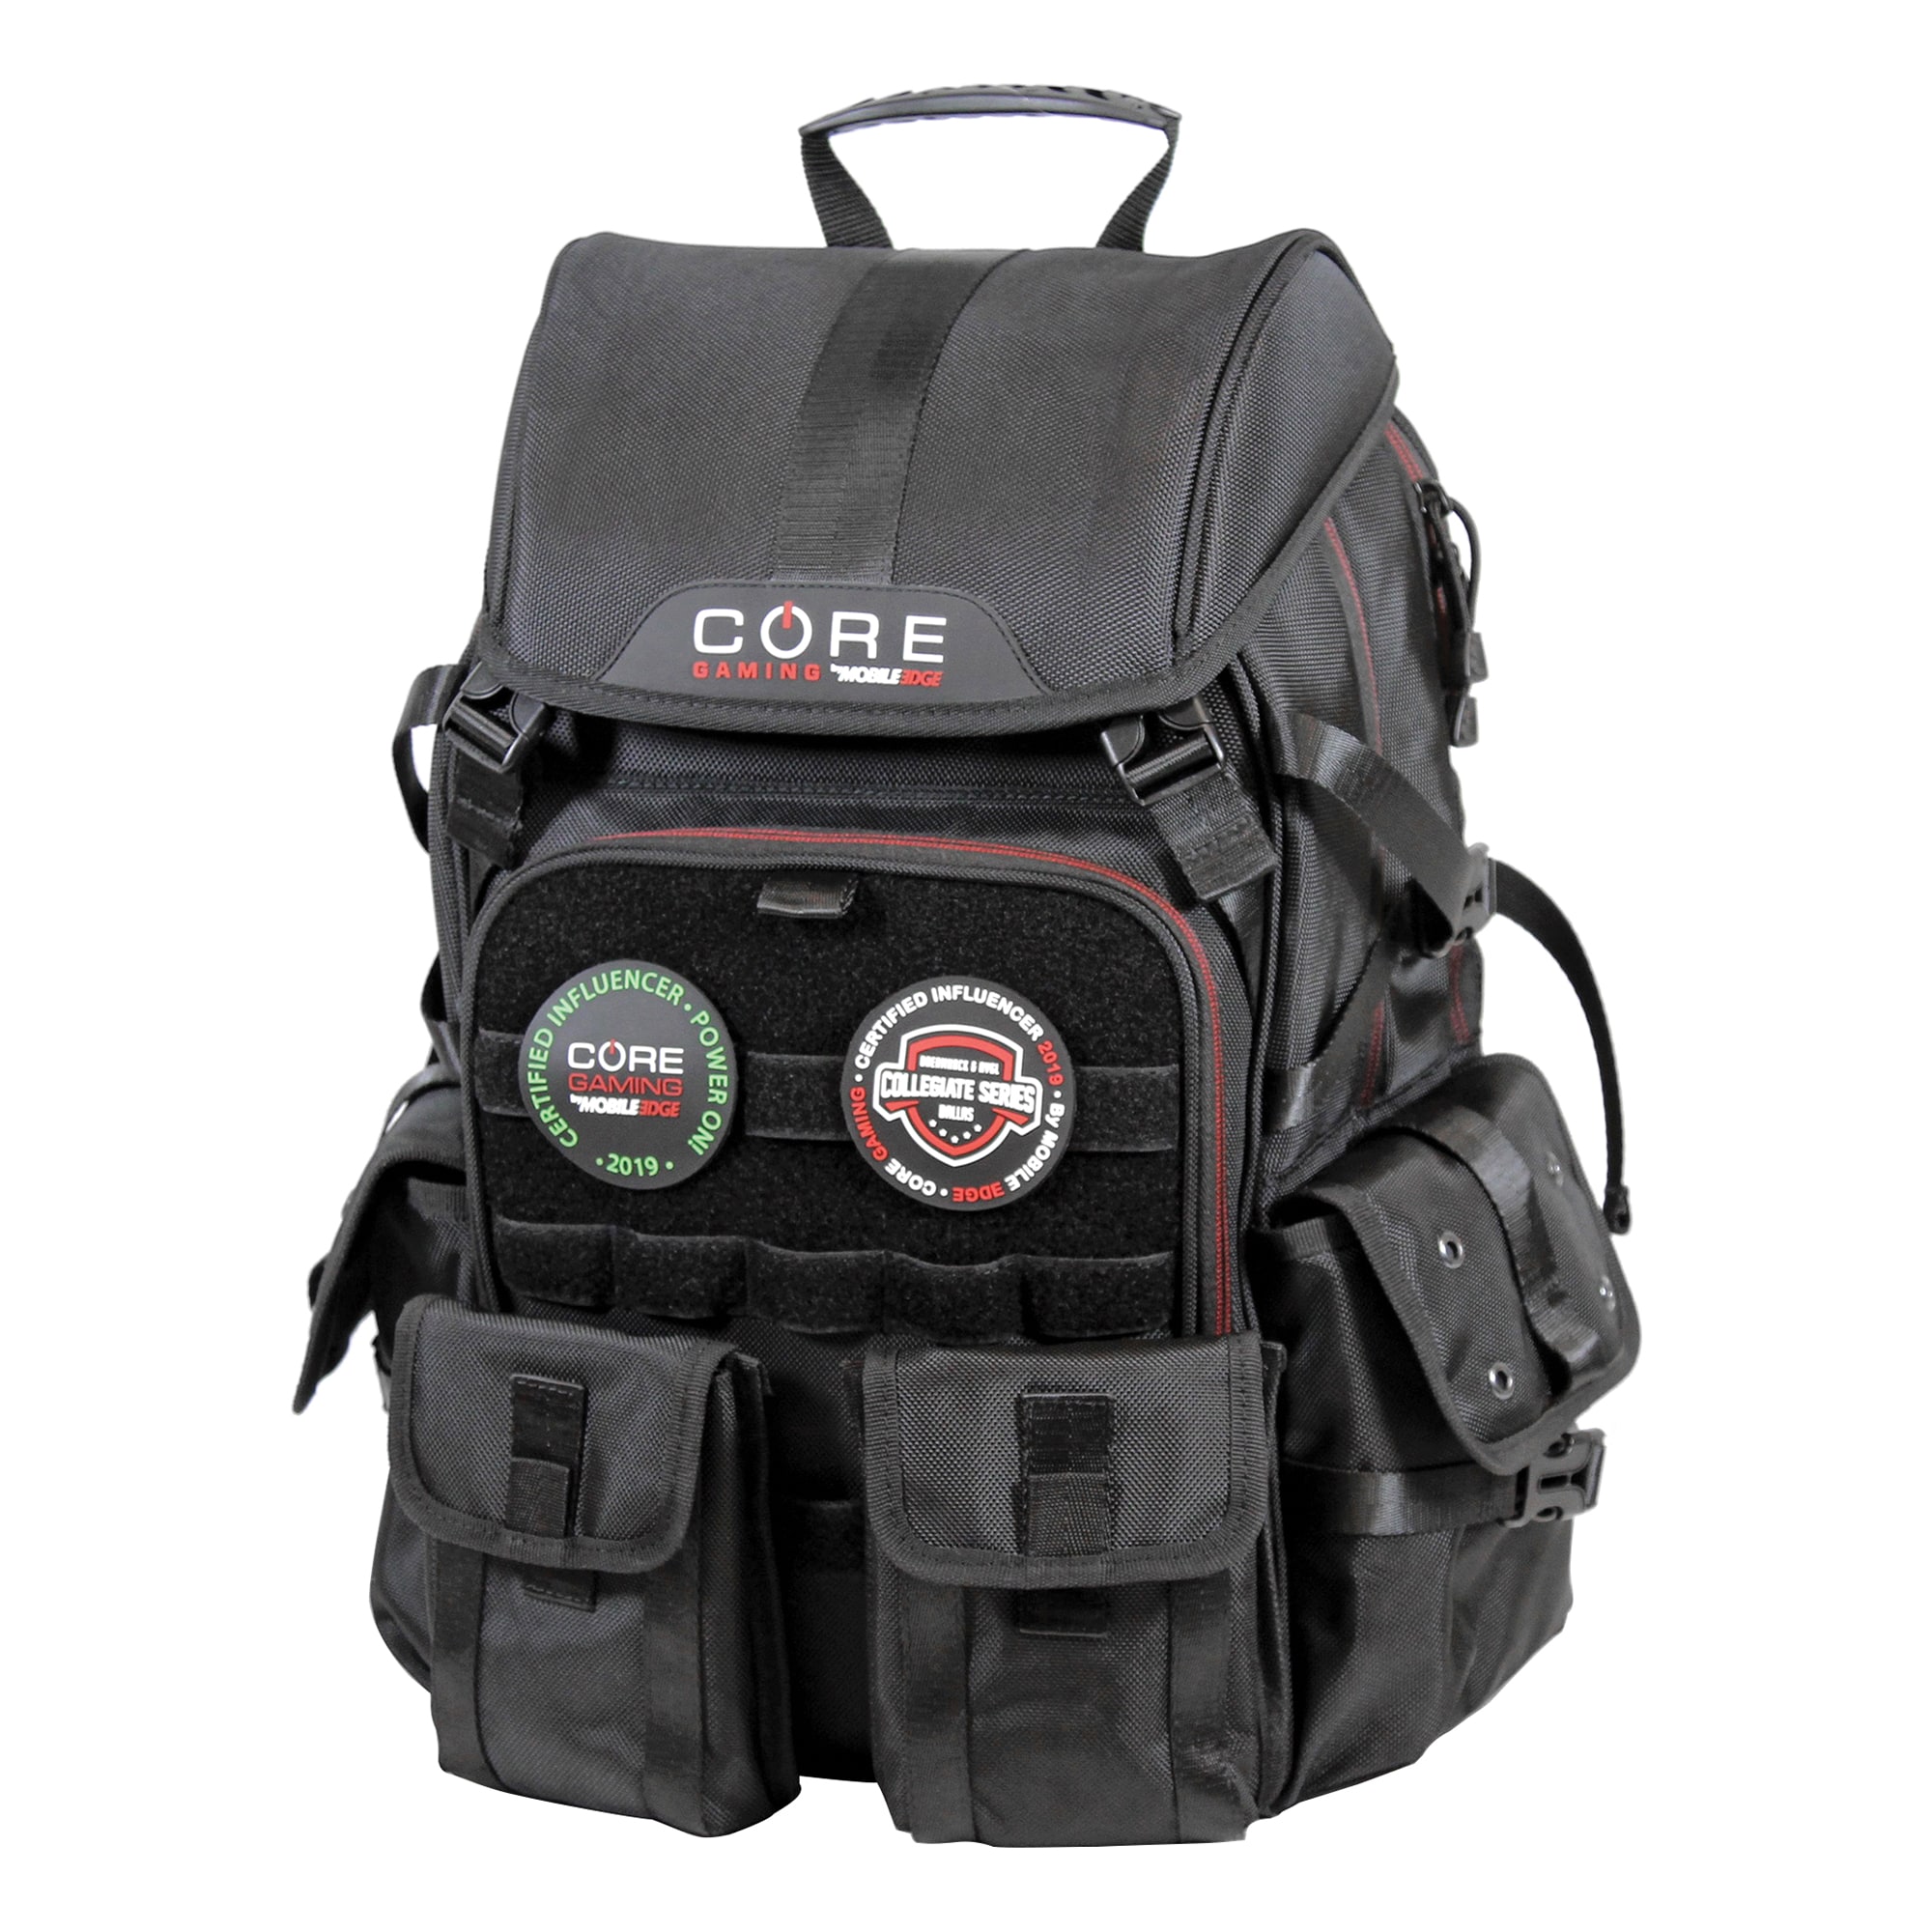 Core round nylon backpack - Off-White - Men